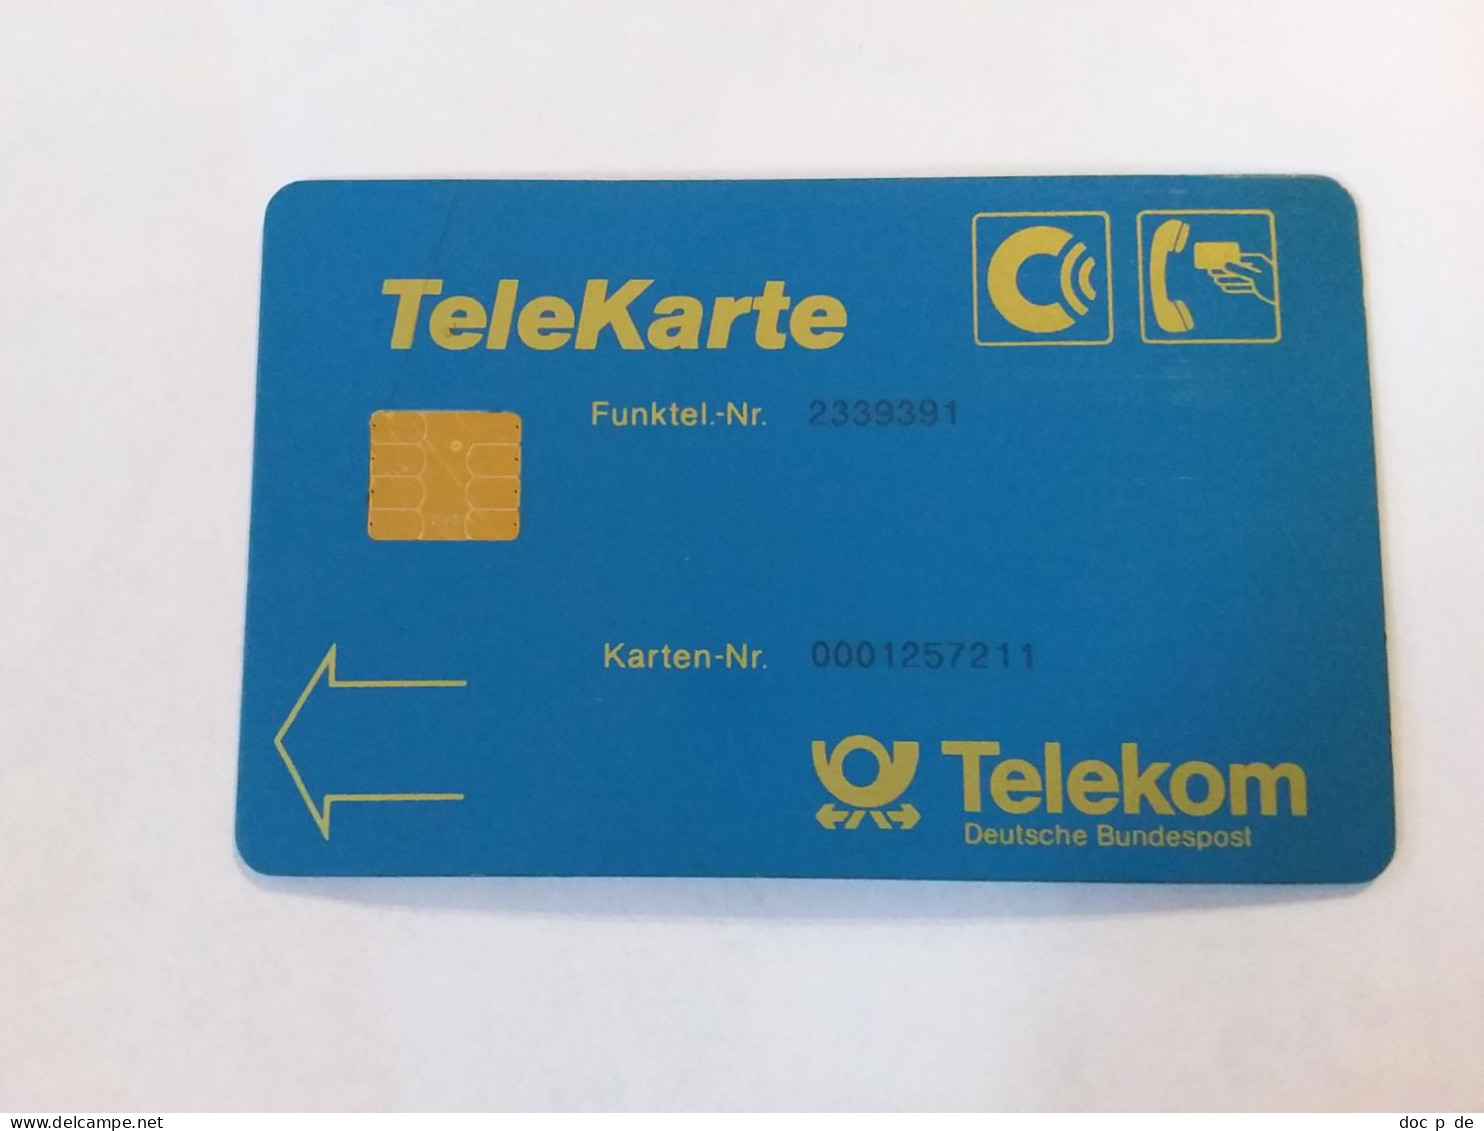 Germany - Telekom TeleKarte Und C-Netz Telefonkarte  - Old Card - Precursors